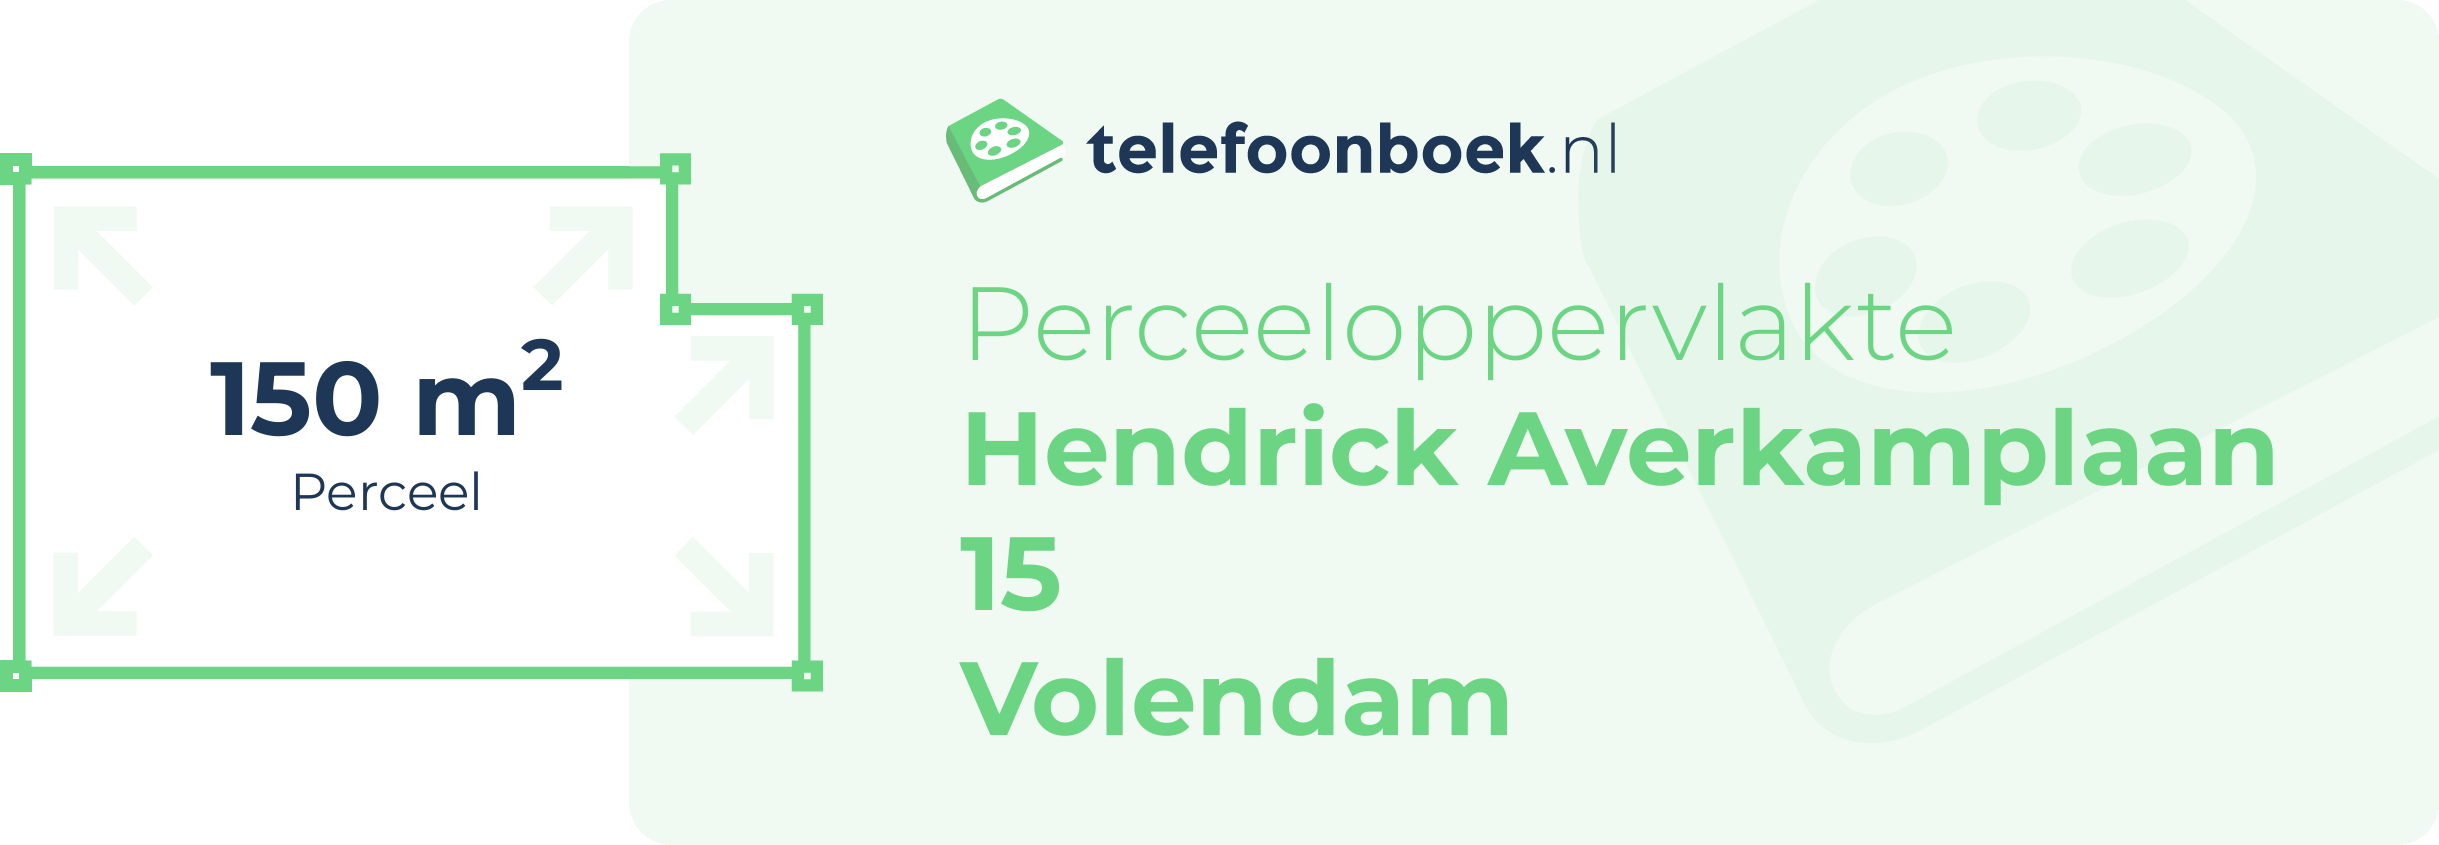 Perceeloppervlakte Hendrick Averkamplaan 15 Volendam